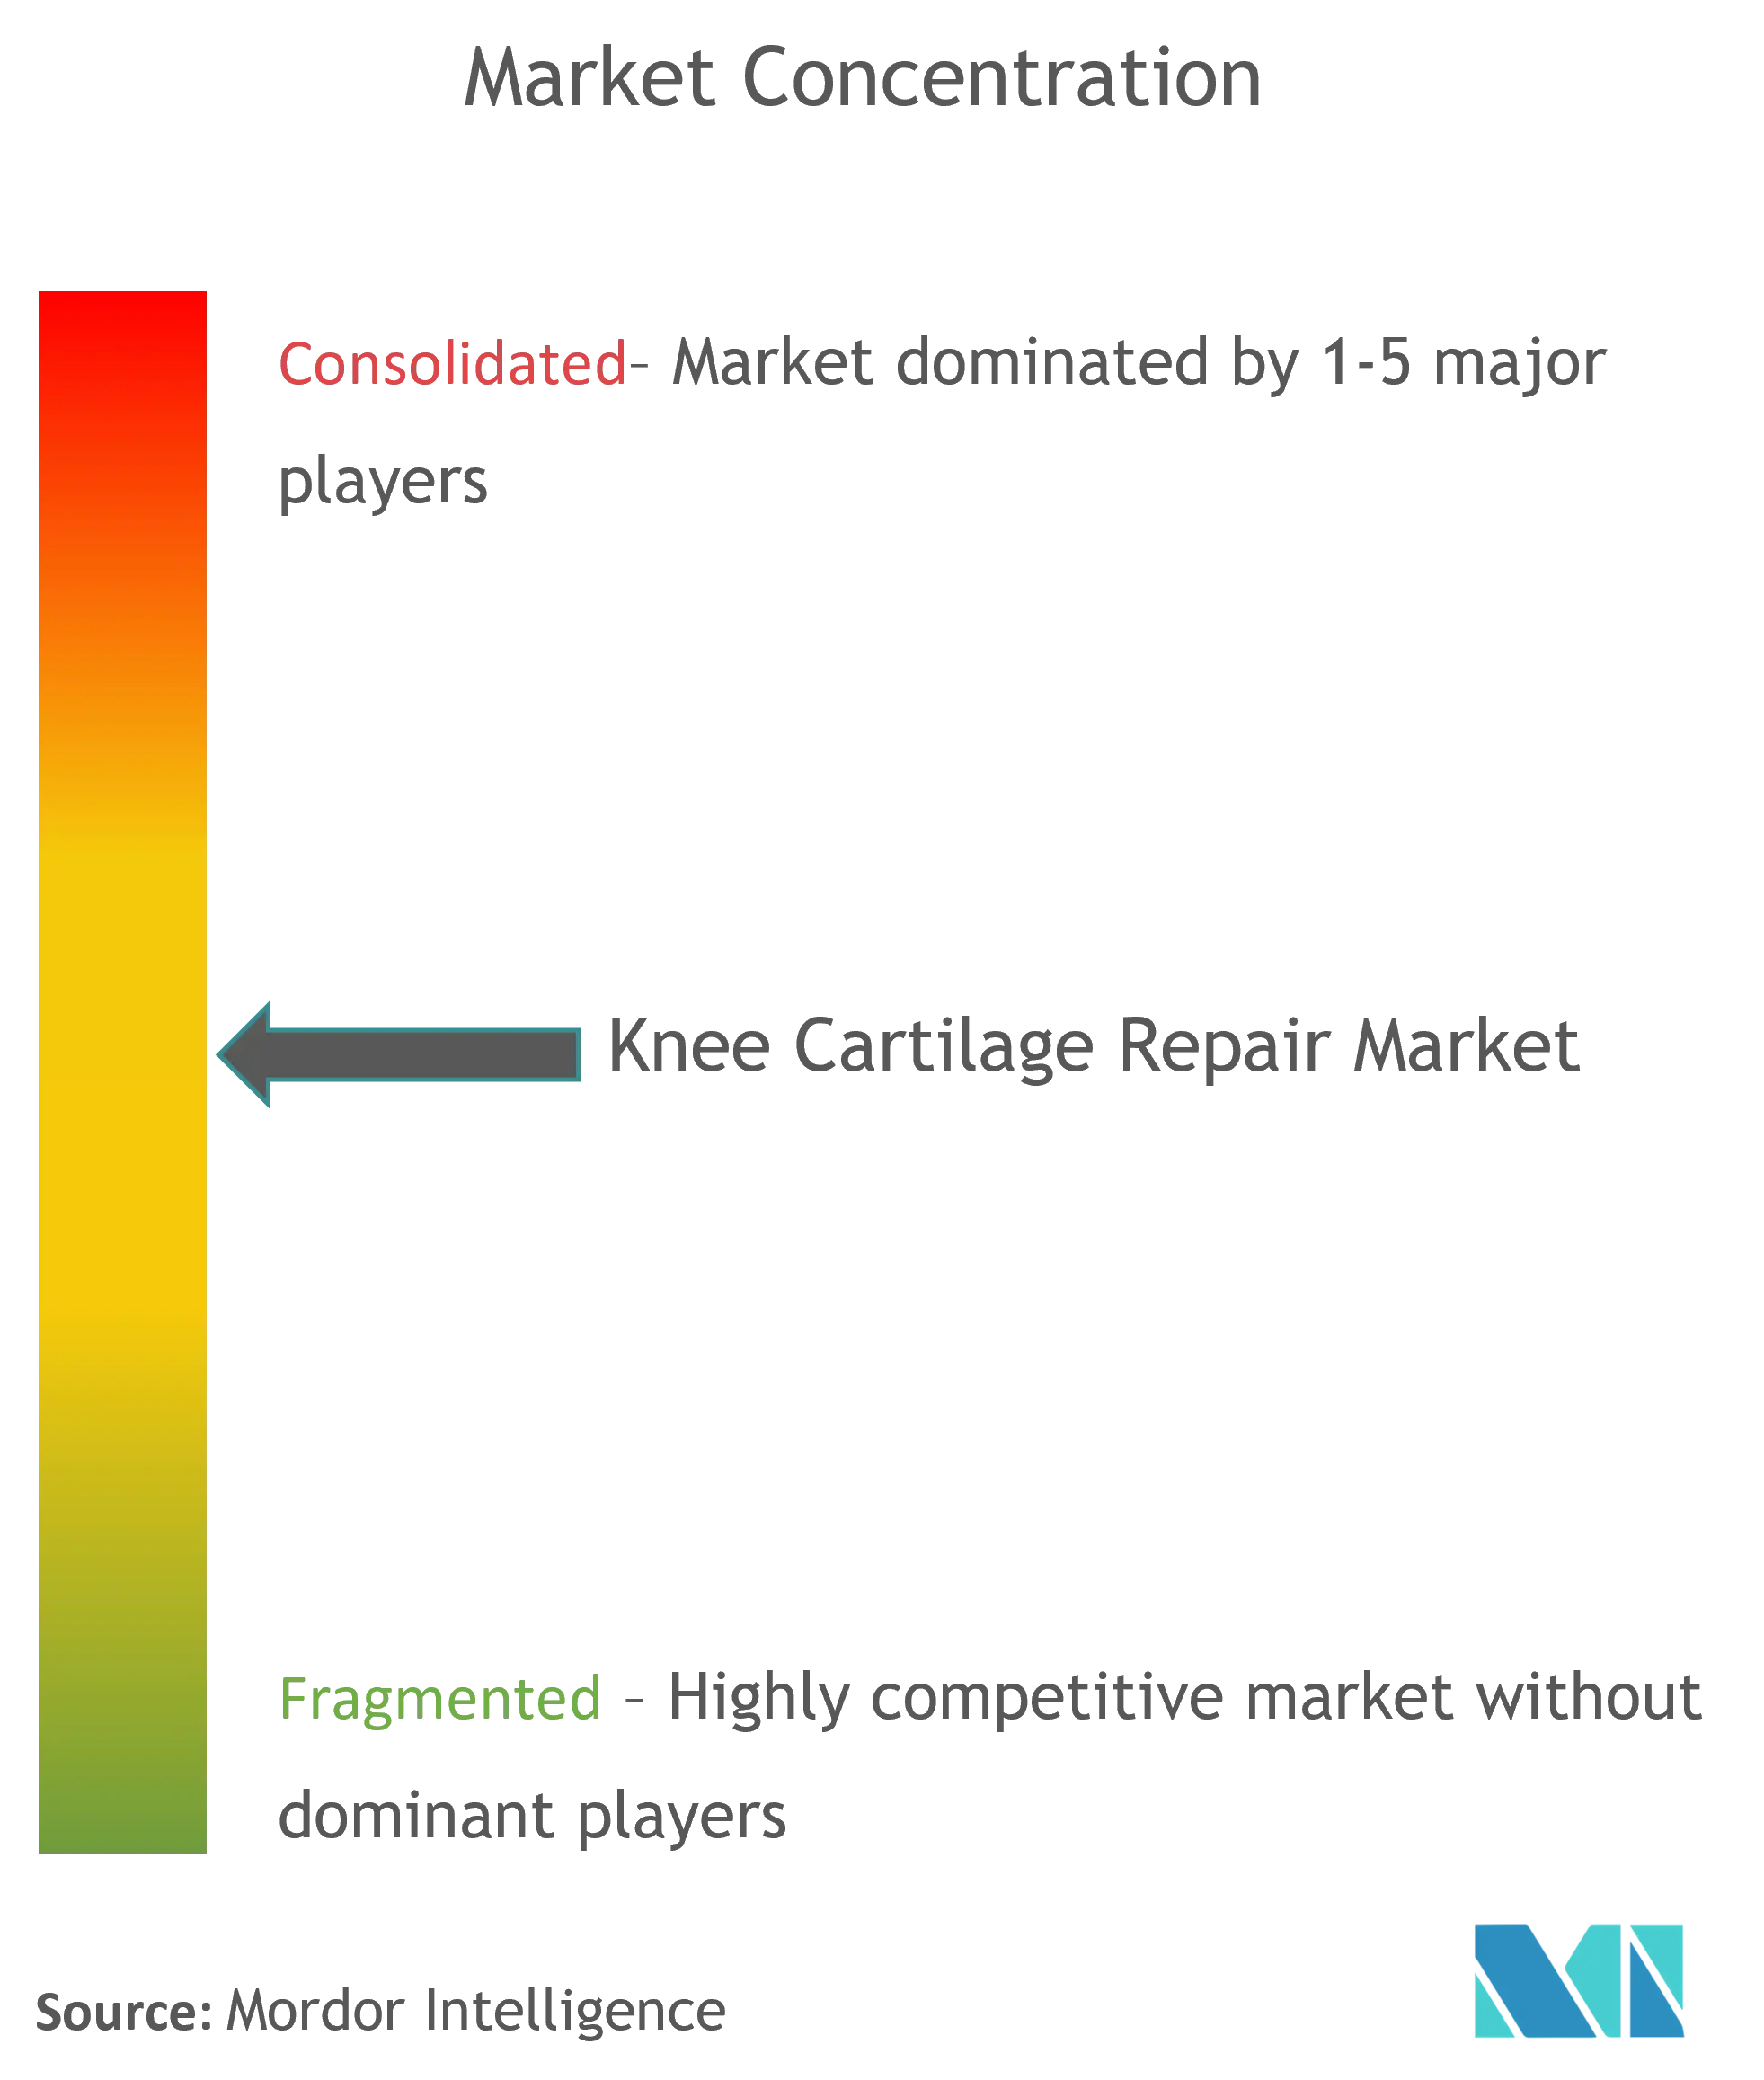 Knee Cartilage Repair Market Concentration